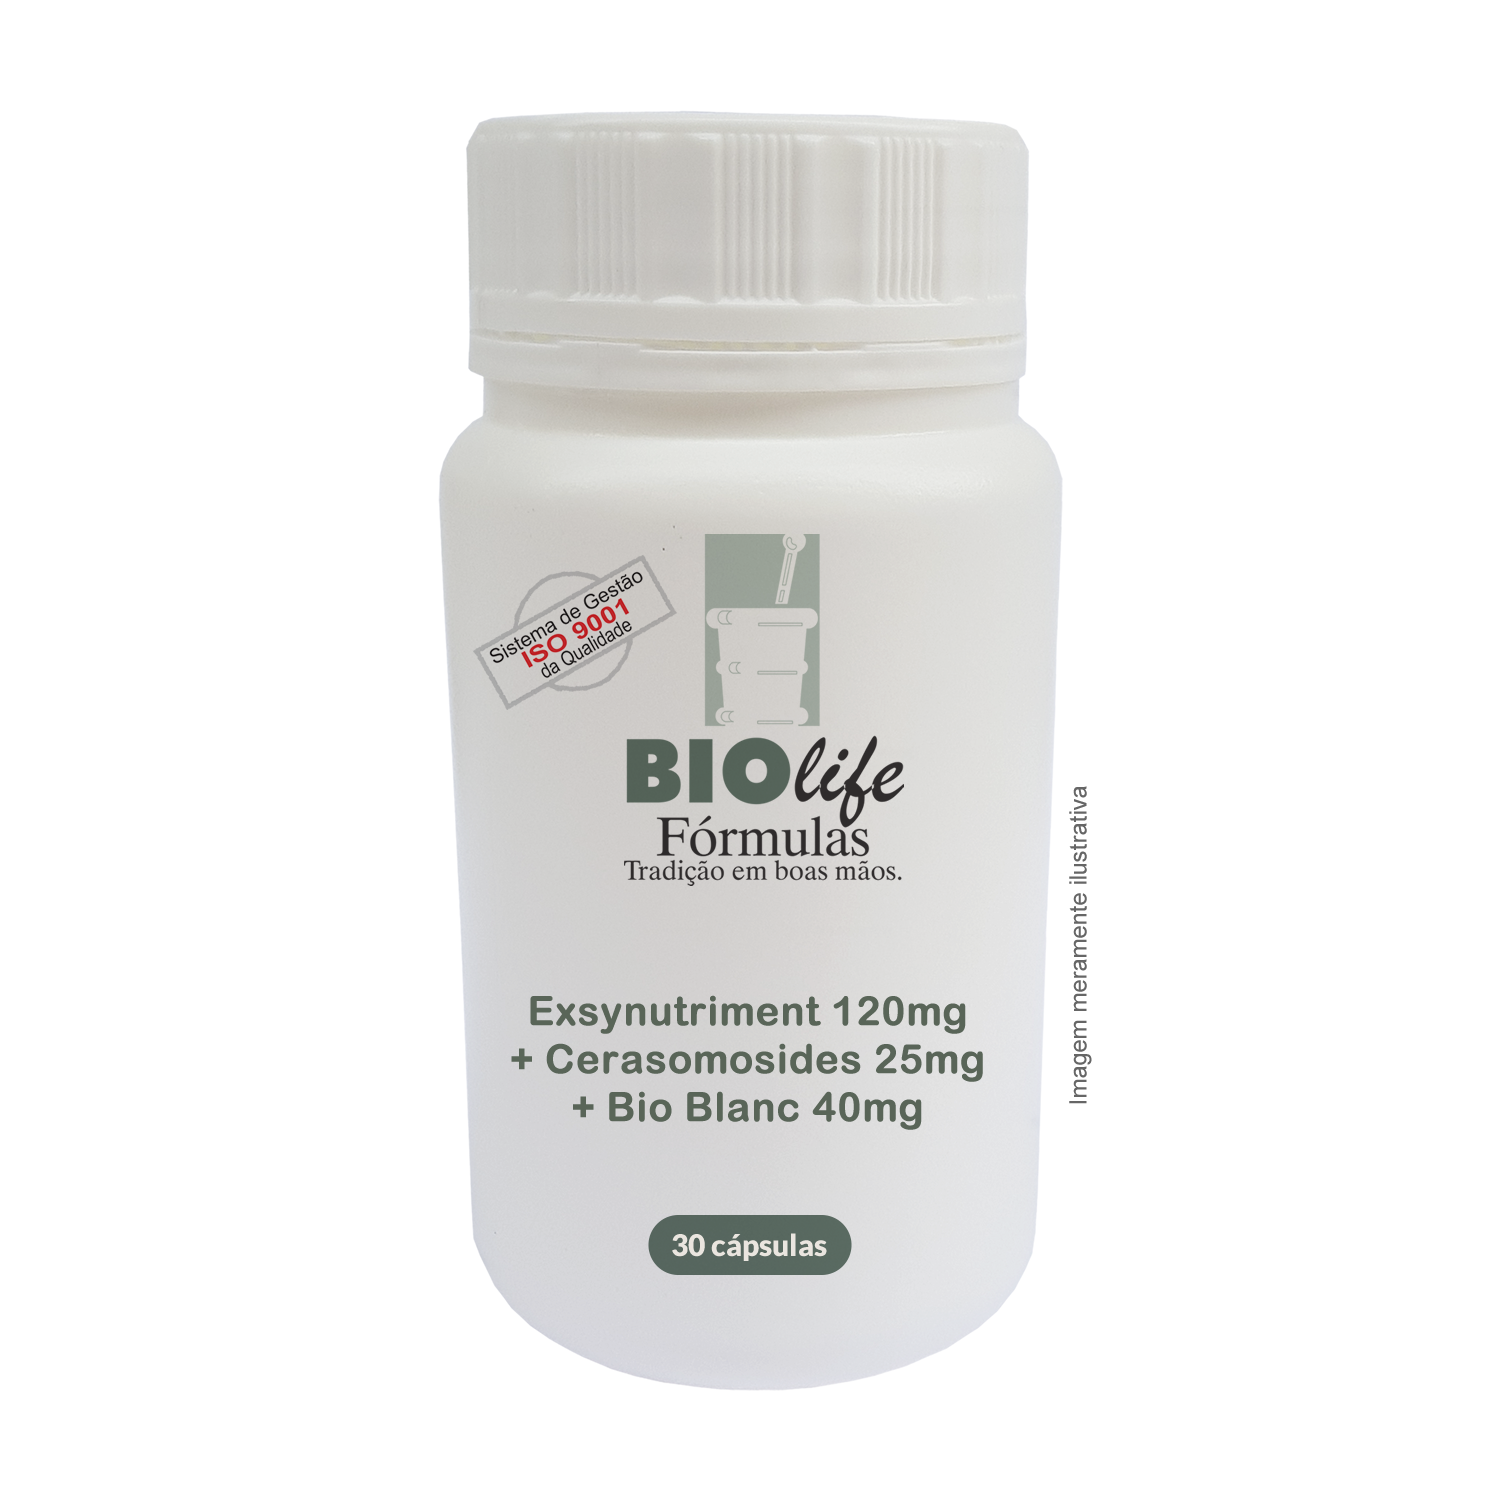 Exsynutriment 120mg + Cerasomosides 25mg + Bio Blanc 40mg - BioLife